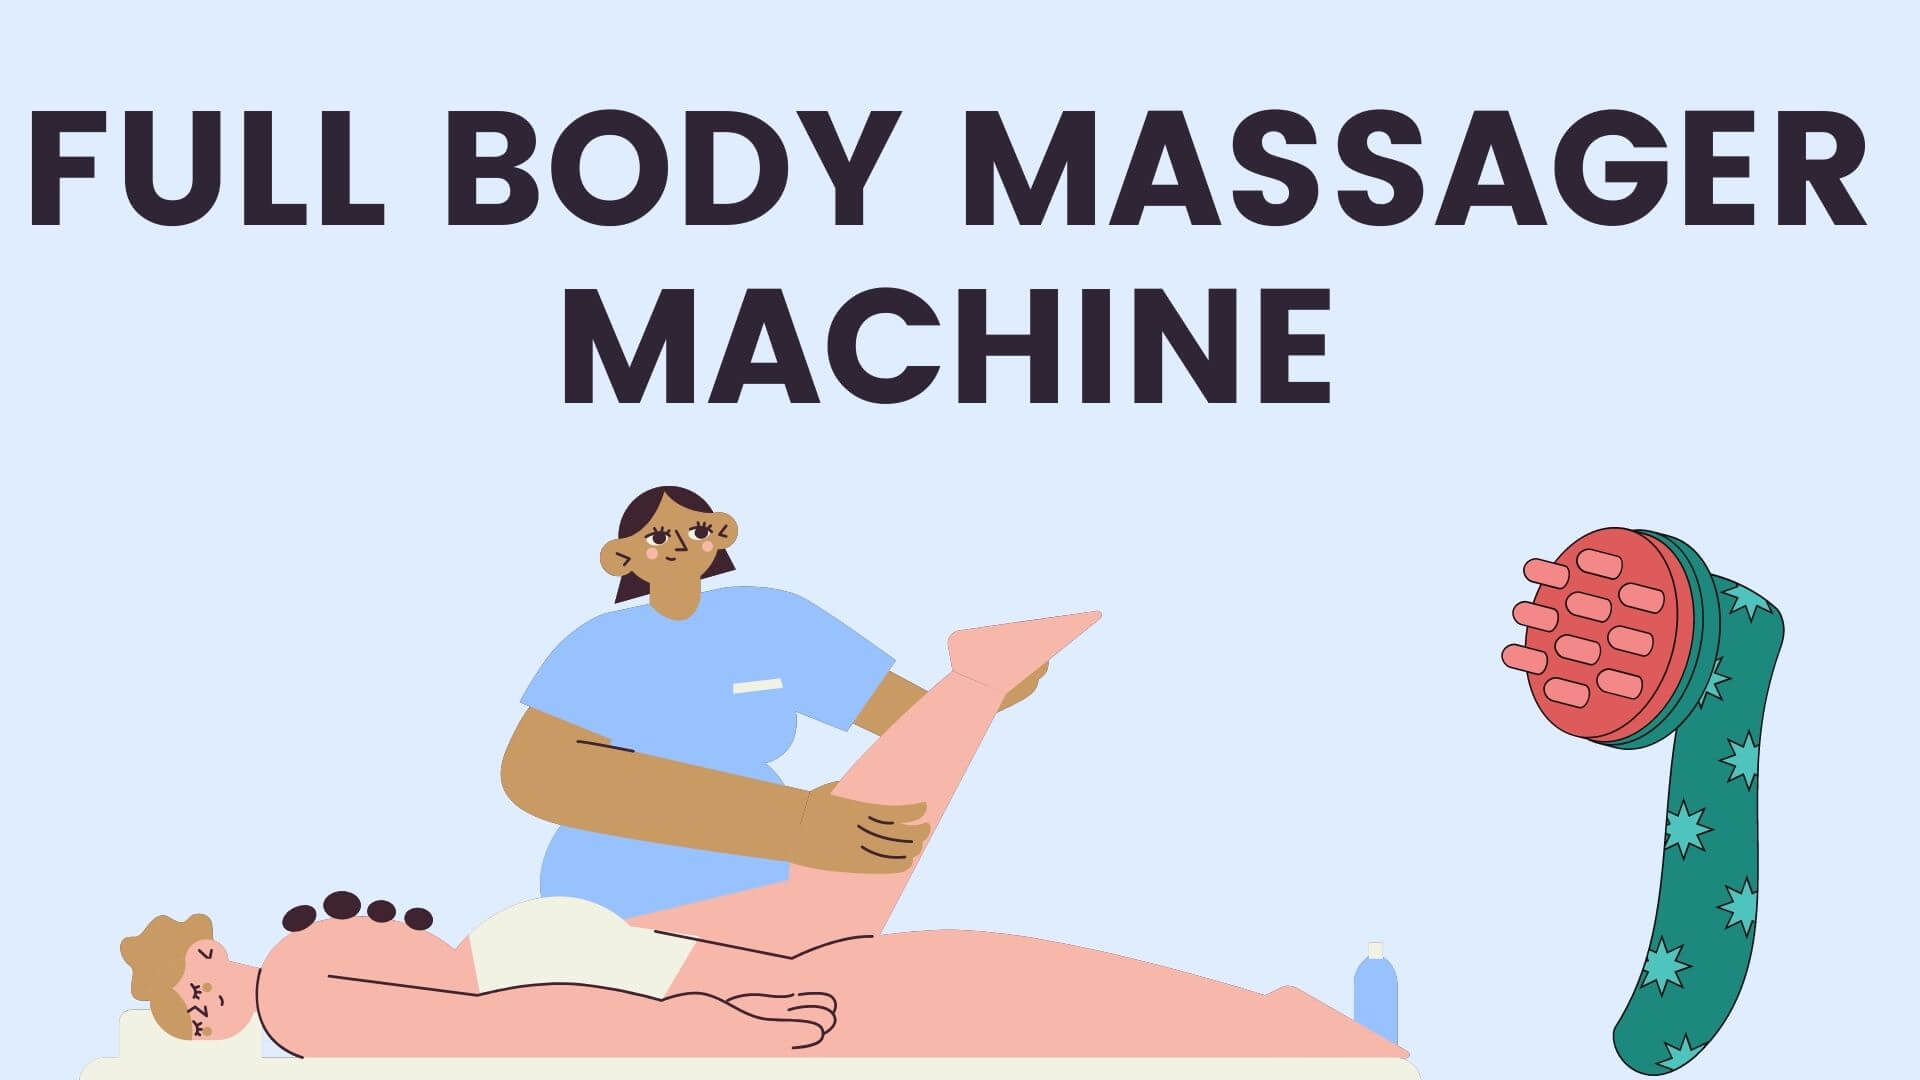 Full Body massager machine amazon